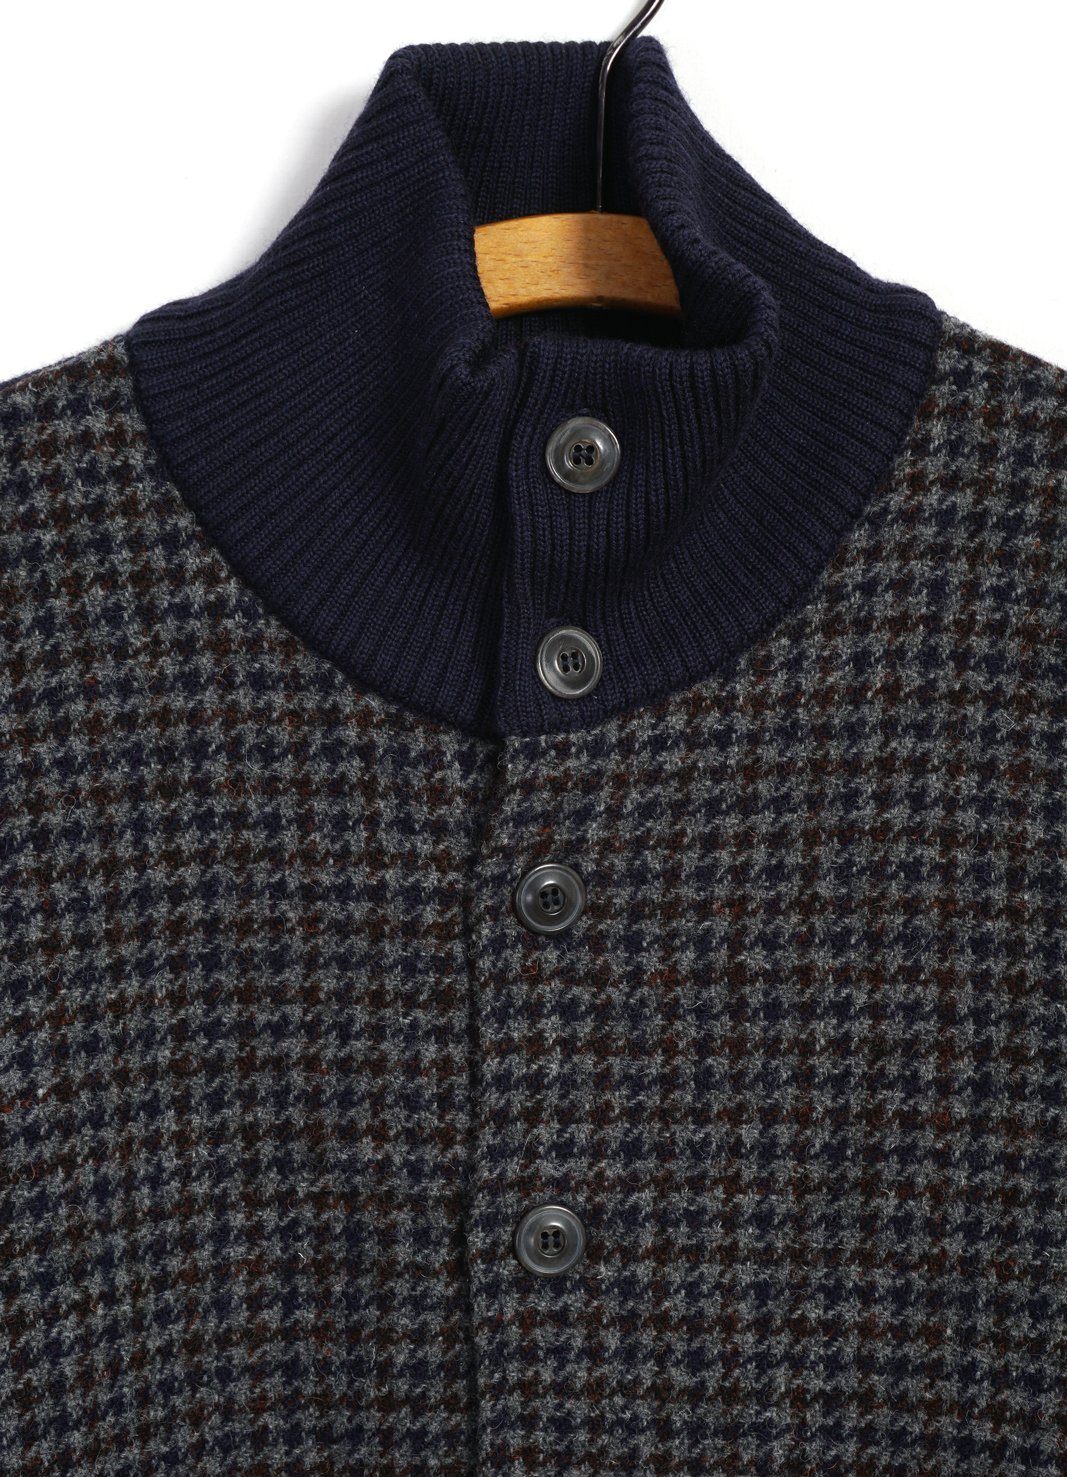 G.R.P - JACKET | Knitted Houndstooth Jacket | Blue/Grey - HANSEN Garments